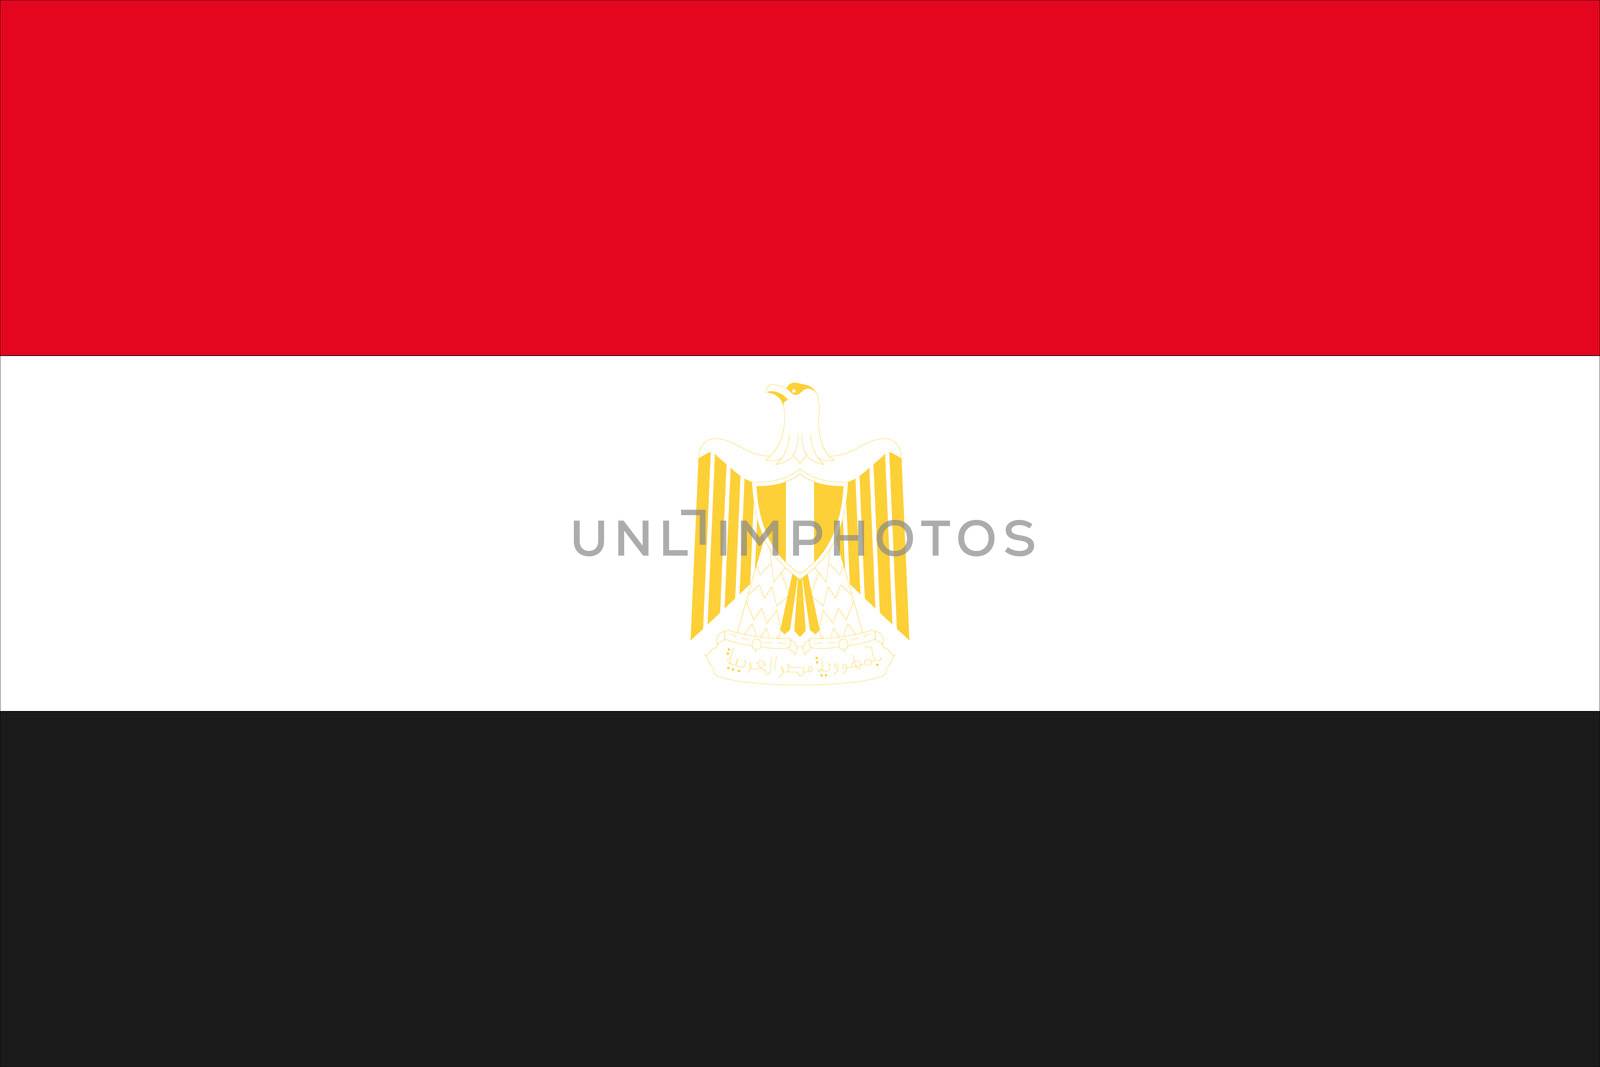 An illustration of the flag of Egypt